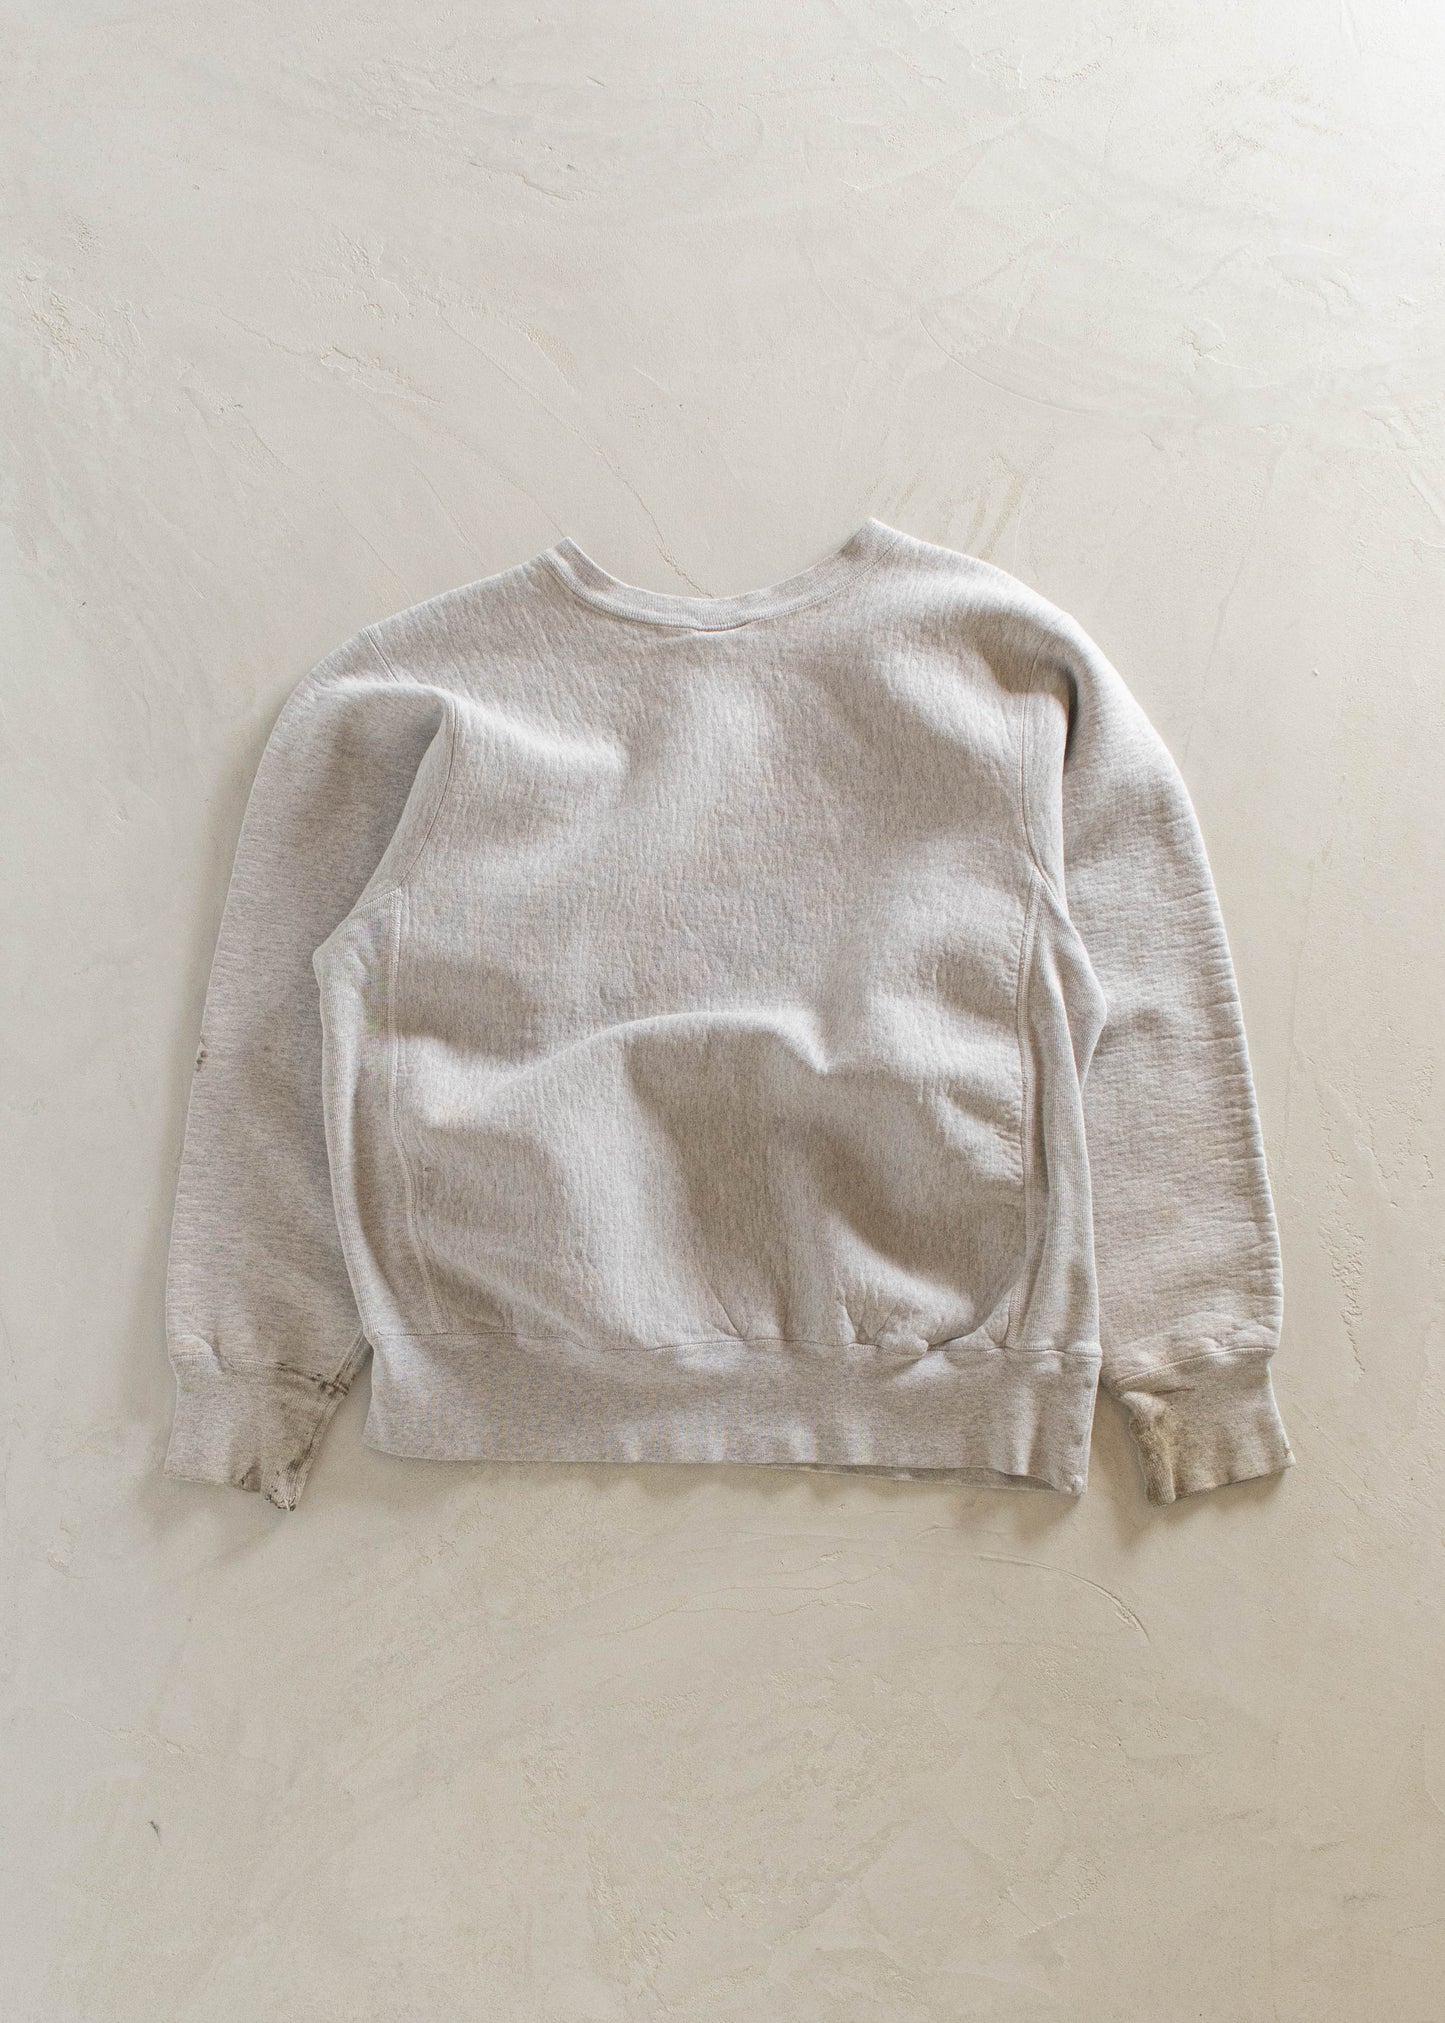 1990s The Cotton Exchange Hershey Bears Reverse Weave Sweatshirt Size M/L